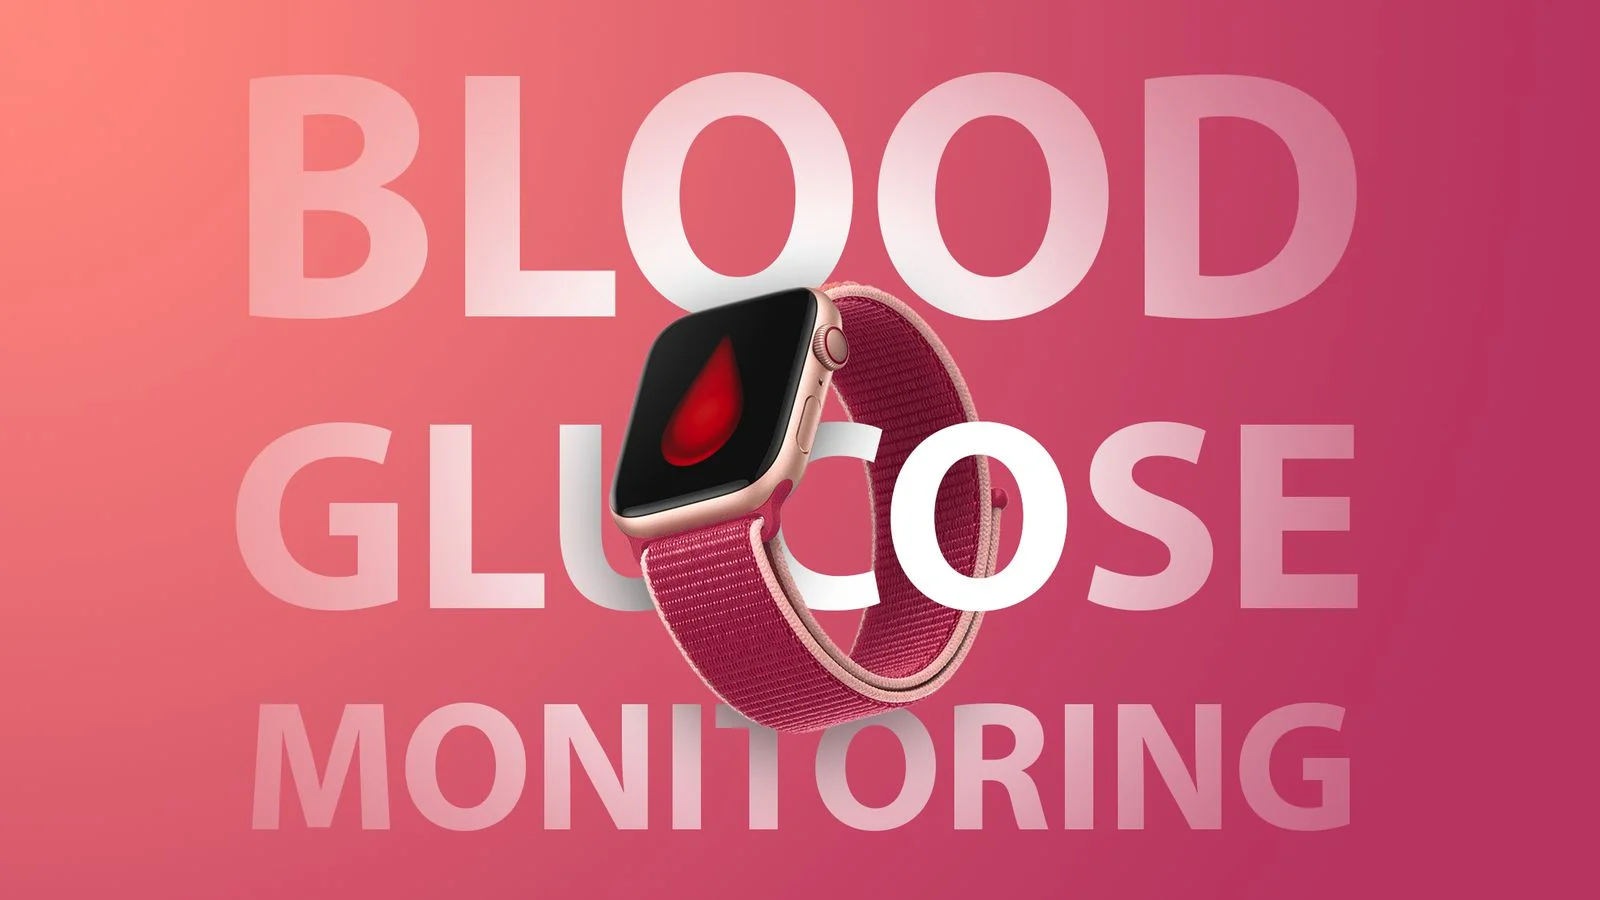 Слухи: Apple разработала технологию неинвазивного мониторинга уровня сахара в крови